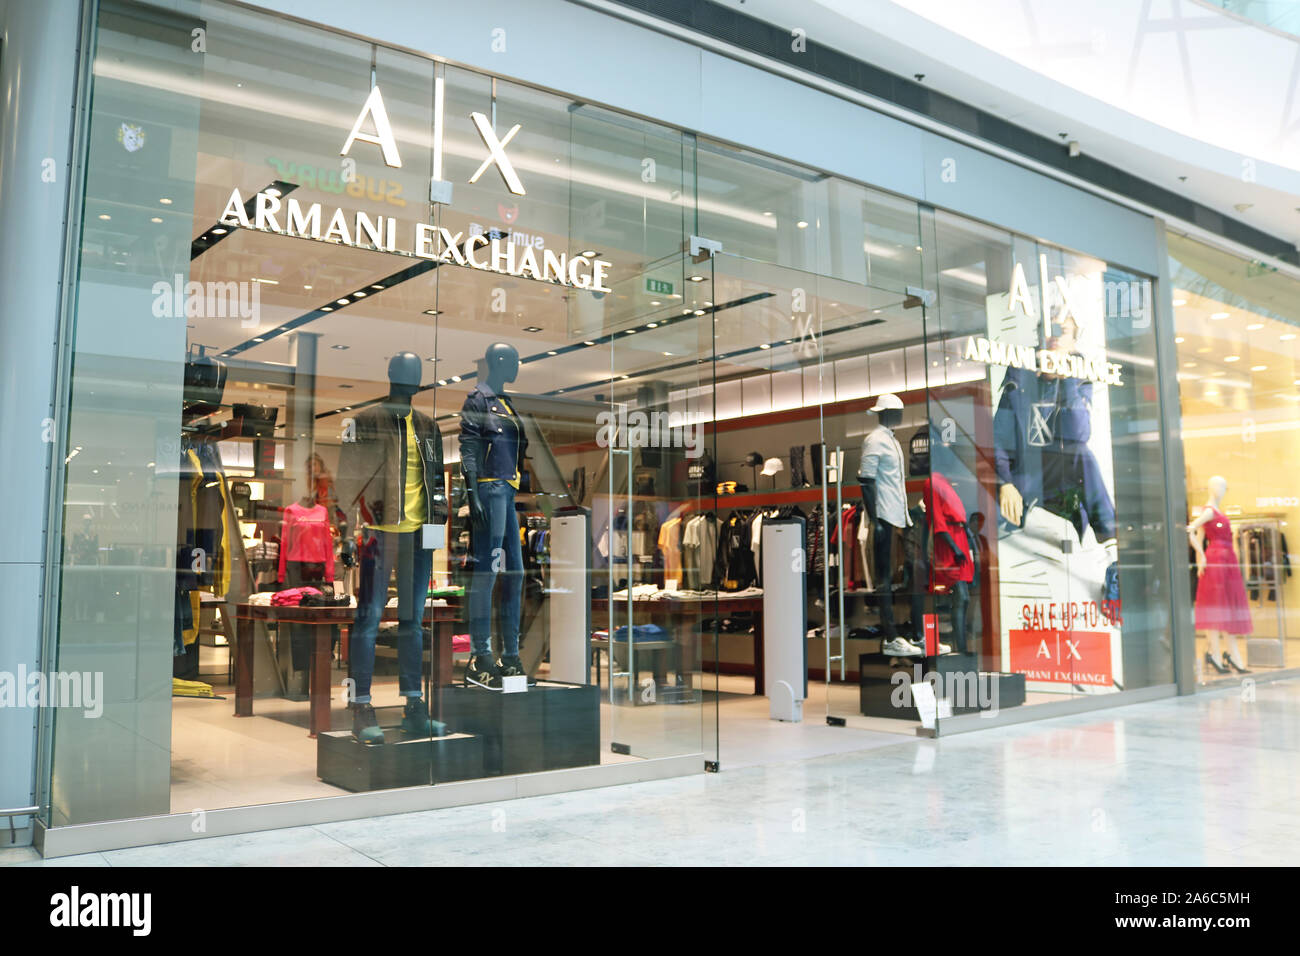 armani exchange galleria mall - 55% OFF 